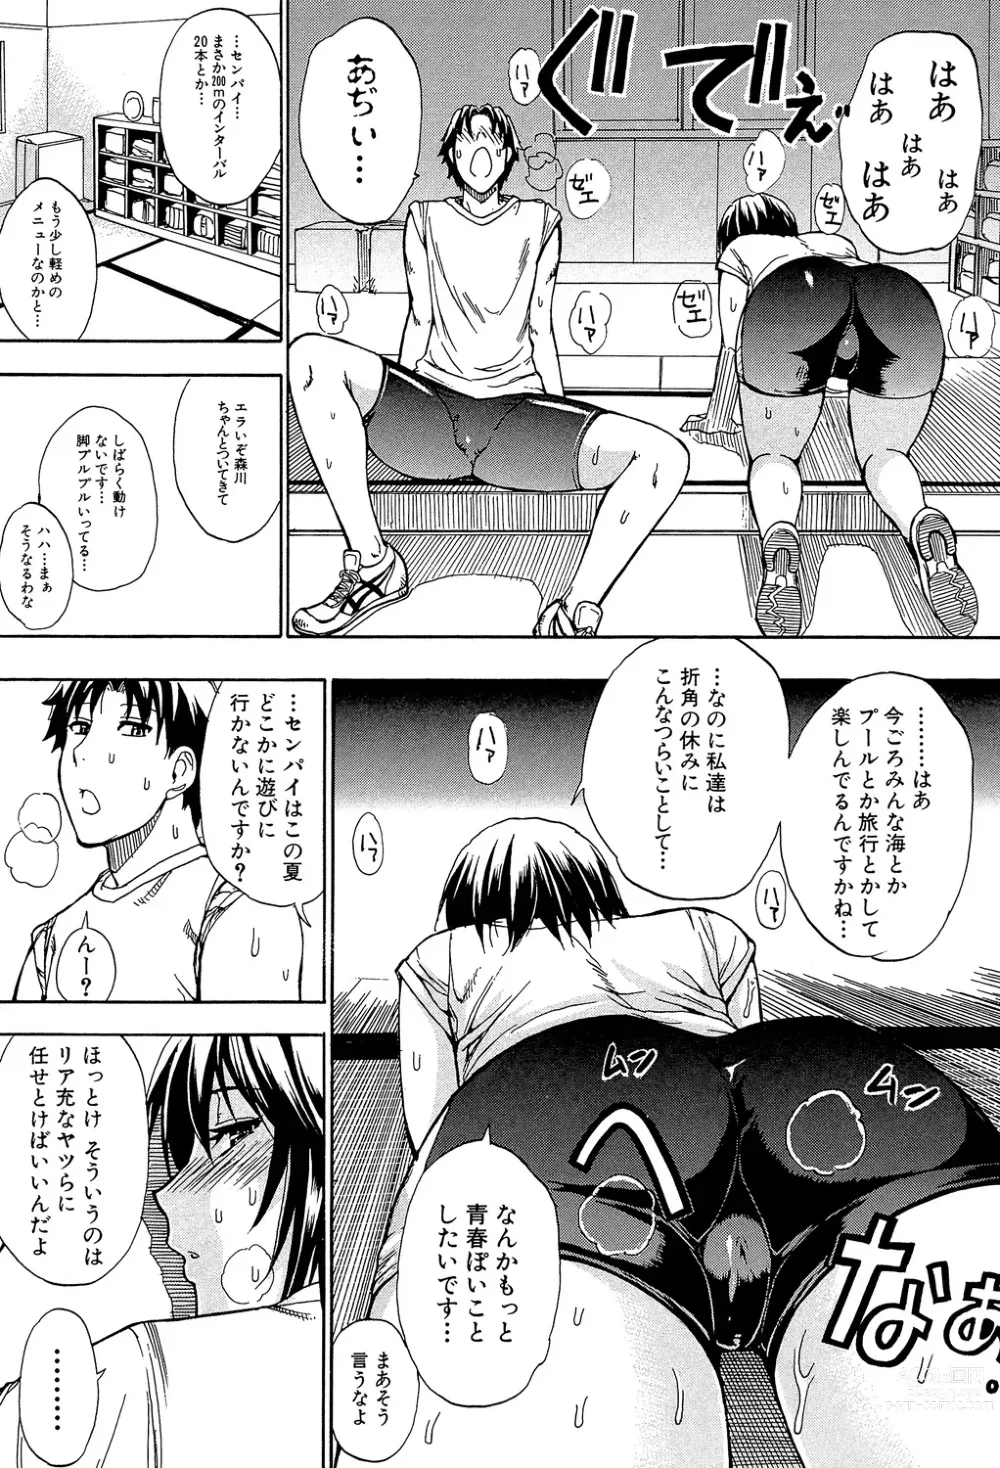 Page 6 of manga Nee, Mou Sukoshi Dake...